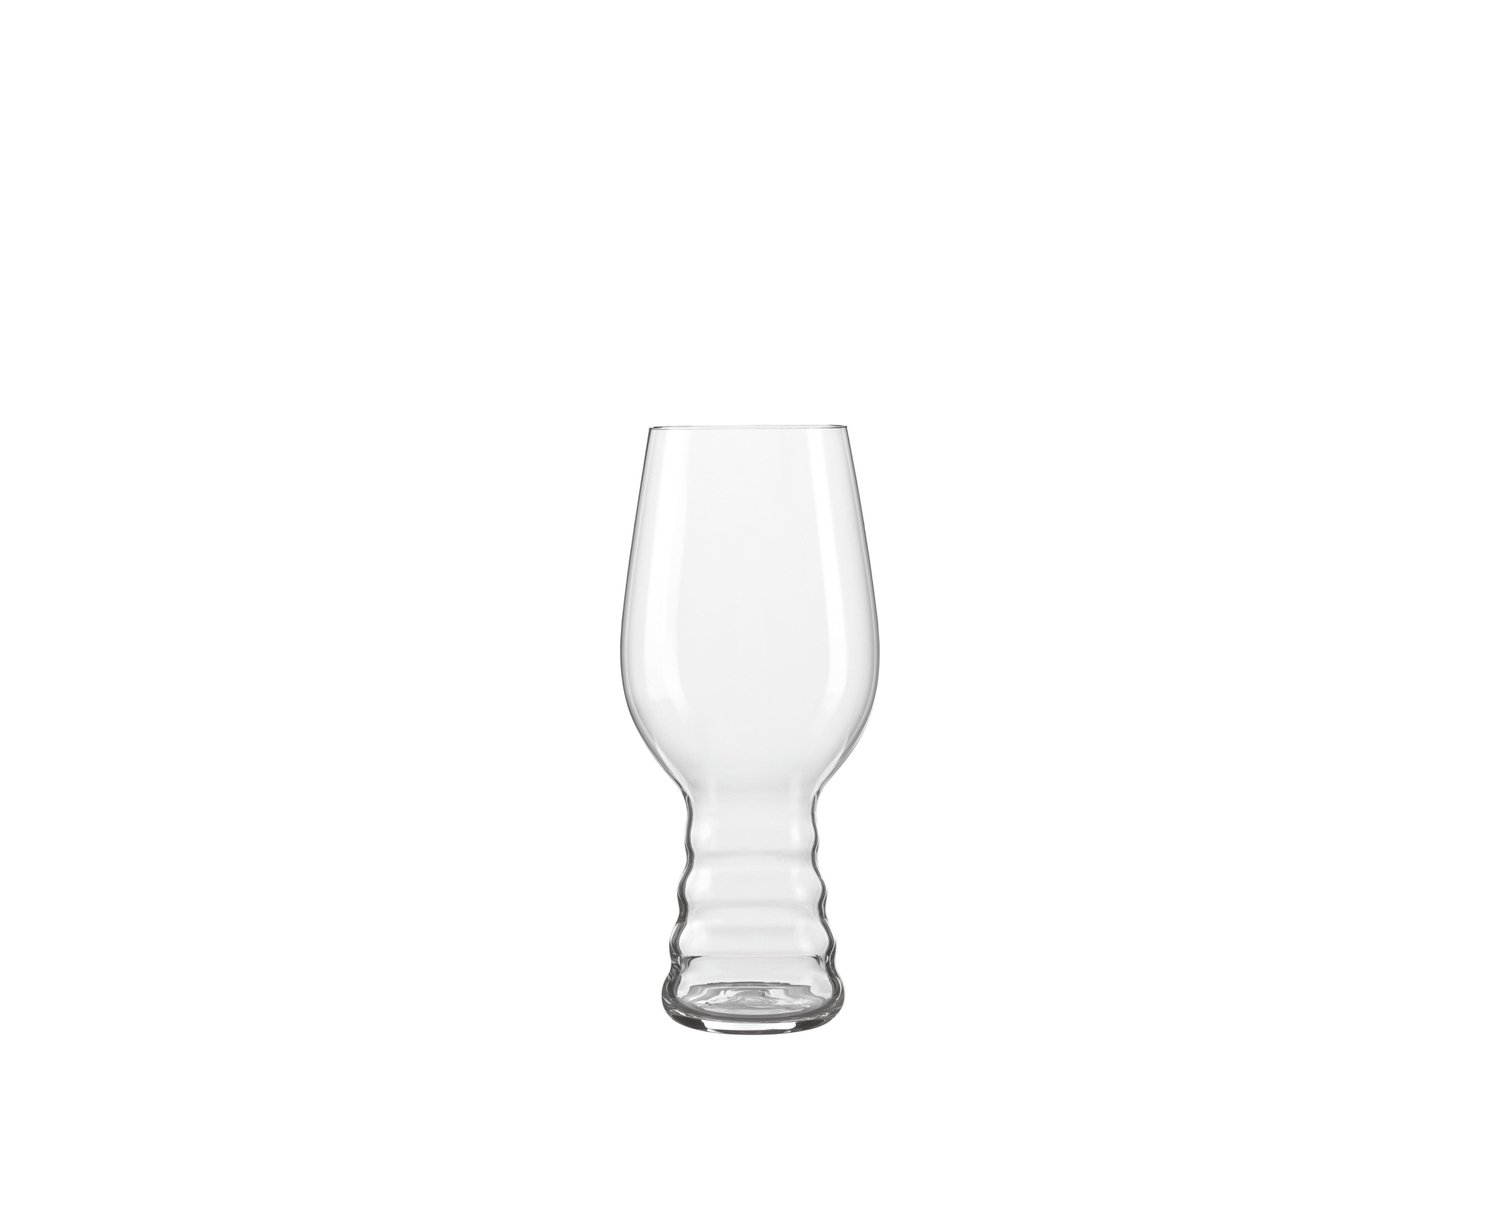 Spiegelau 19.1 oz IPA glass (set of 6), Set of 6 - Kroger